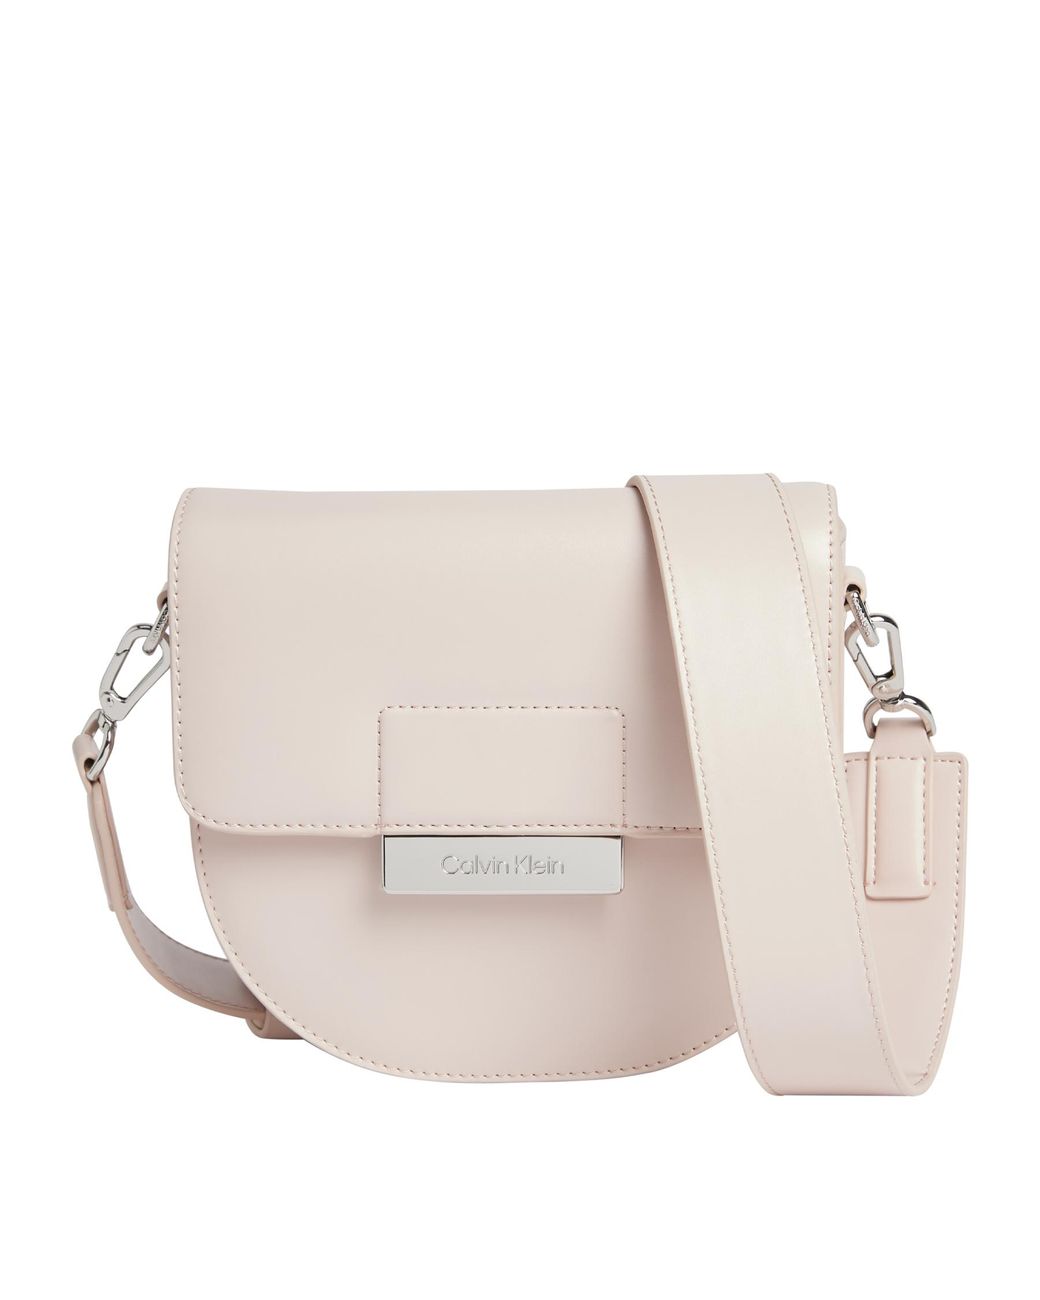 Calvin Klein Ck Core Saddle Bag Sm Handbag in Natural | Lyst